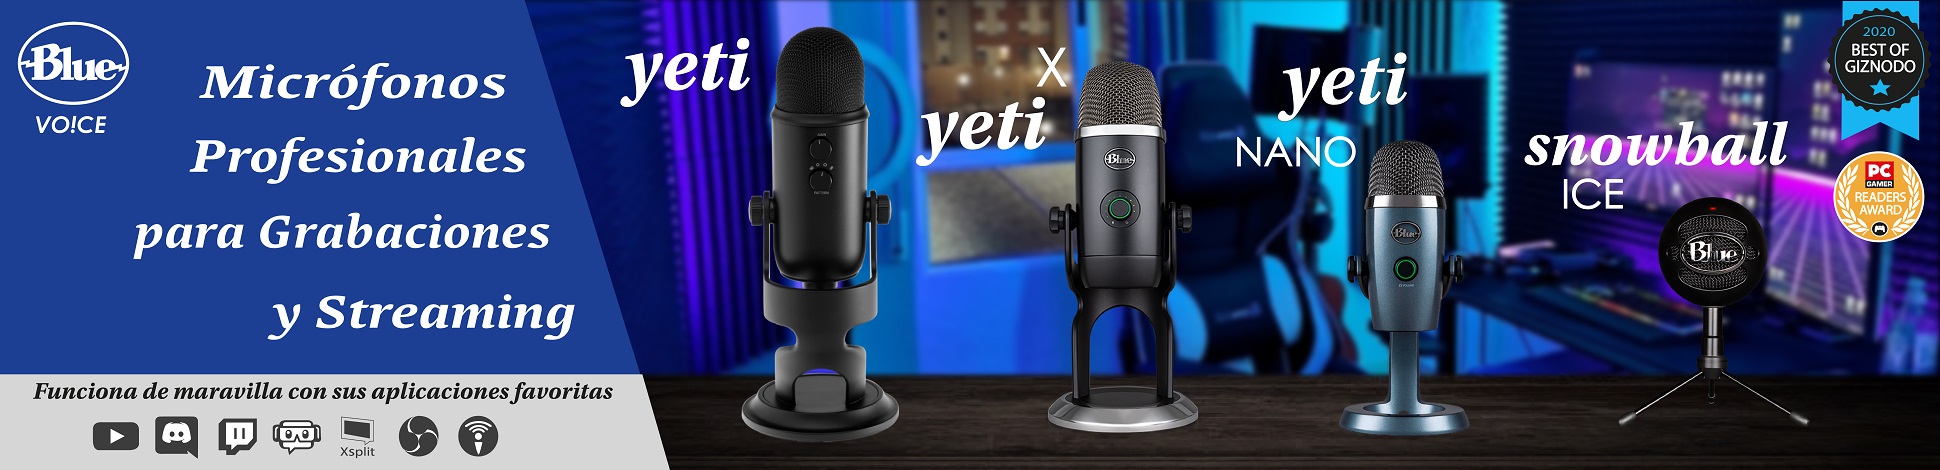 Blue microfonos Yeti.jpg